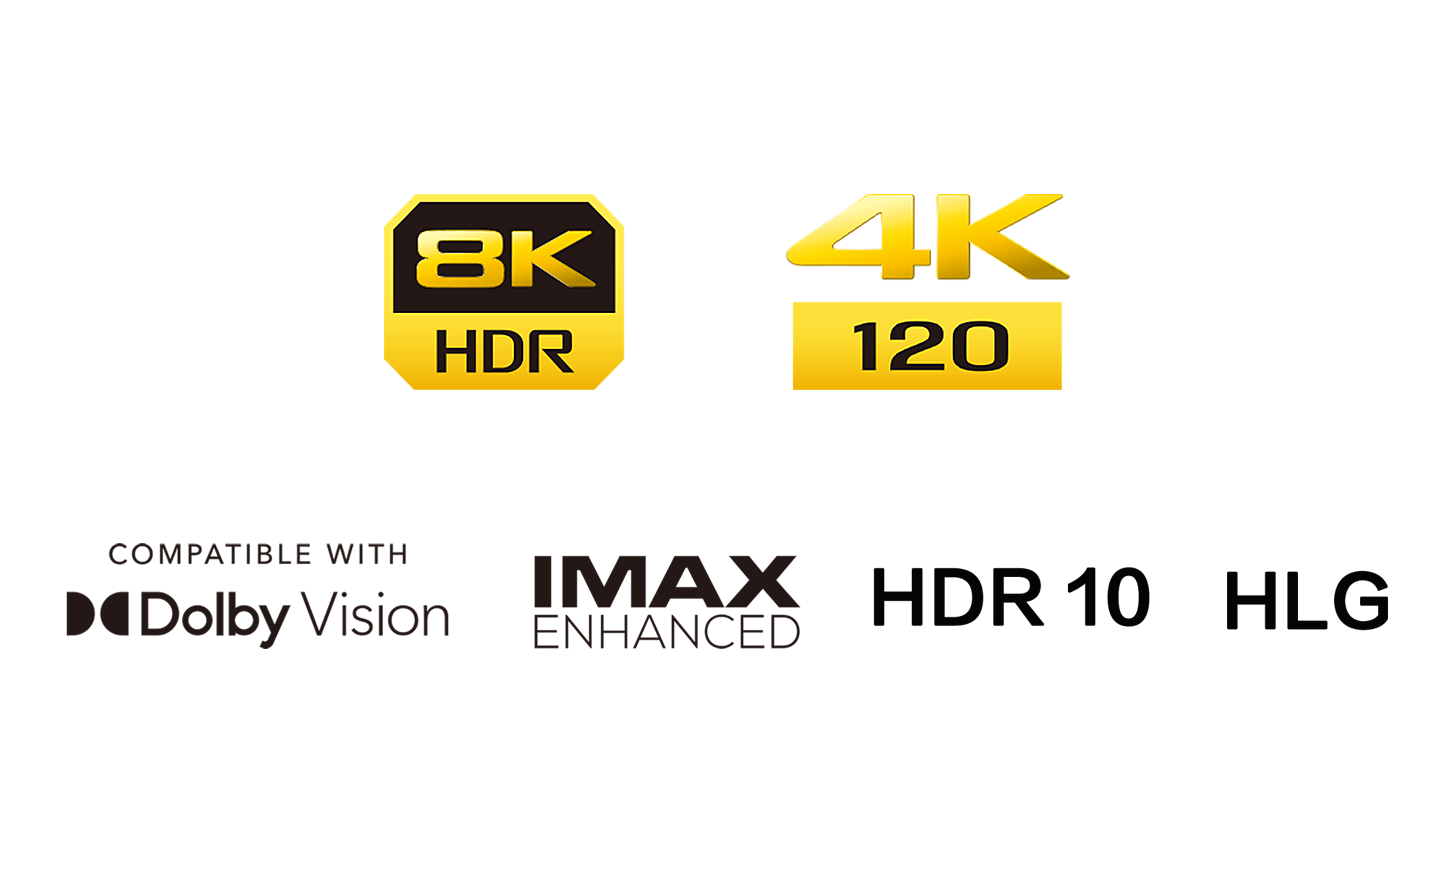 8K HDR logó, 4k 120 logó, Compatible with Dolby Vision logó, HDR 10 logó, IMAX Enhanced logó, HLG logó